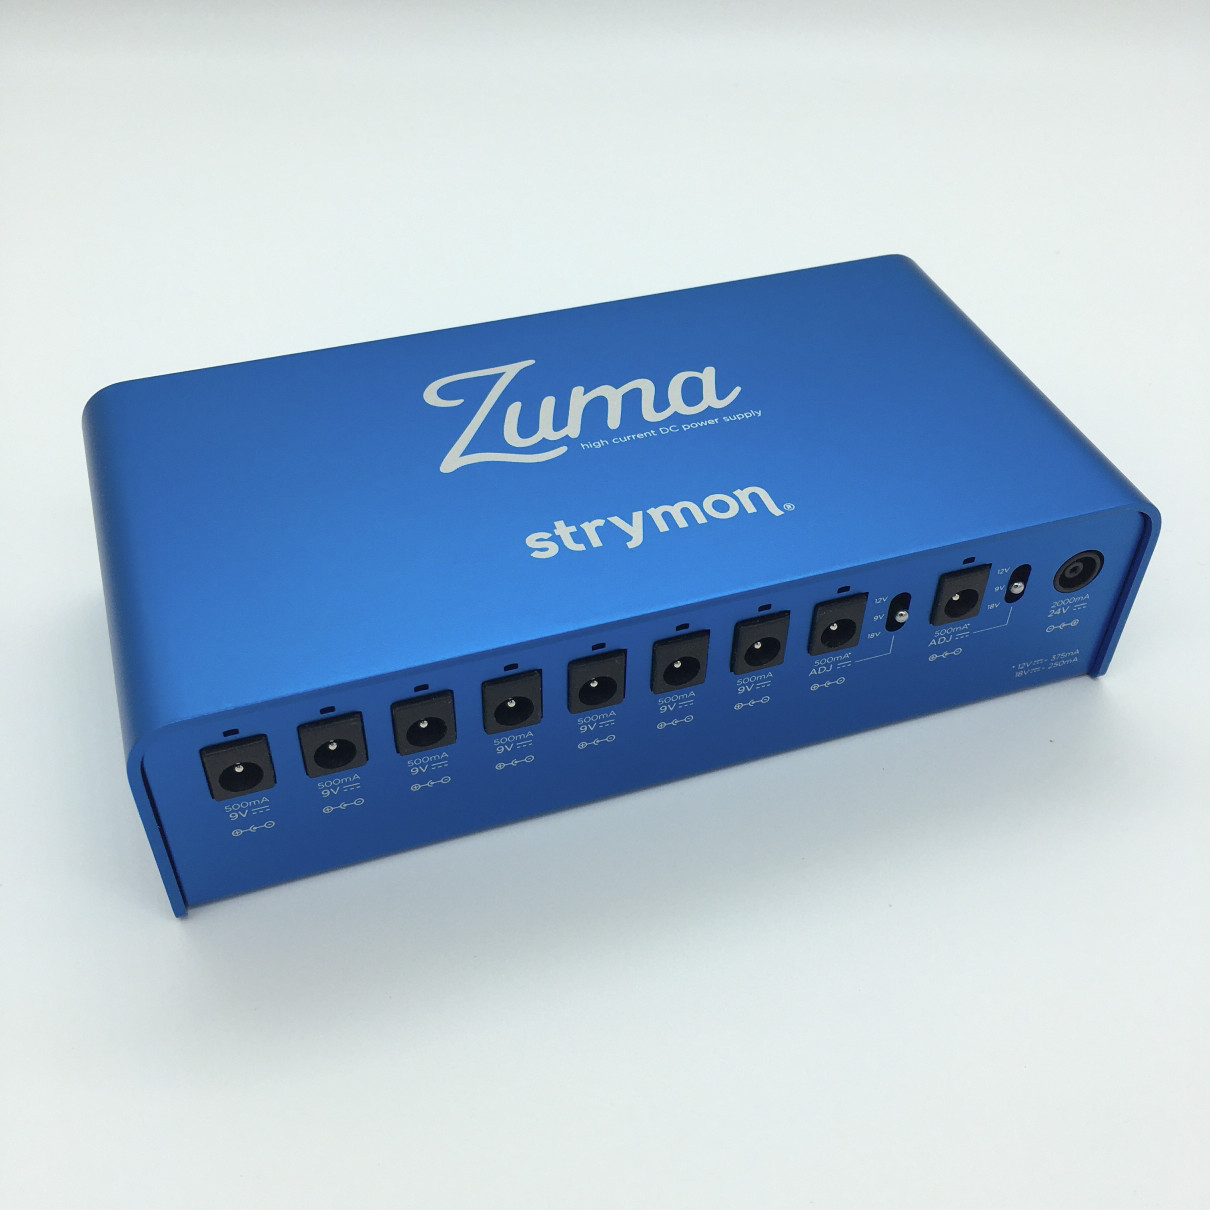 Strymon Zuma 9-Output DC Power Supply - Strymon - Pedals - Products